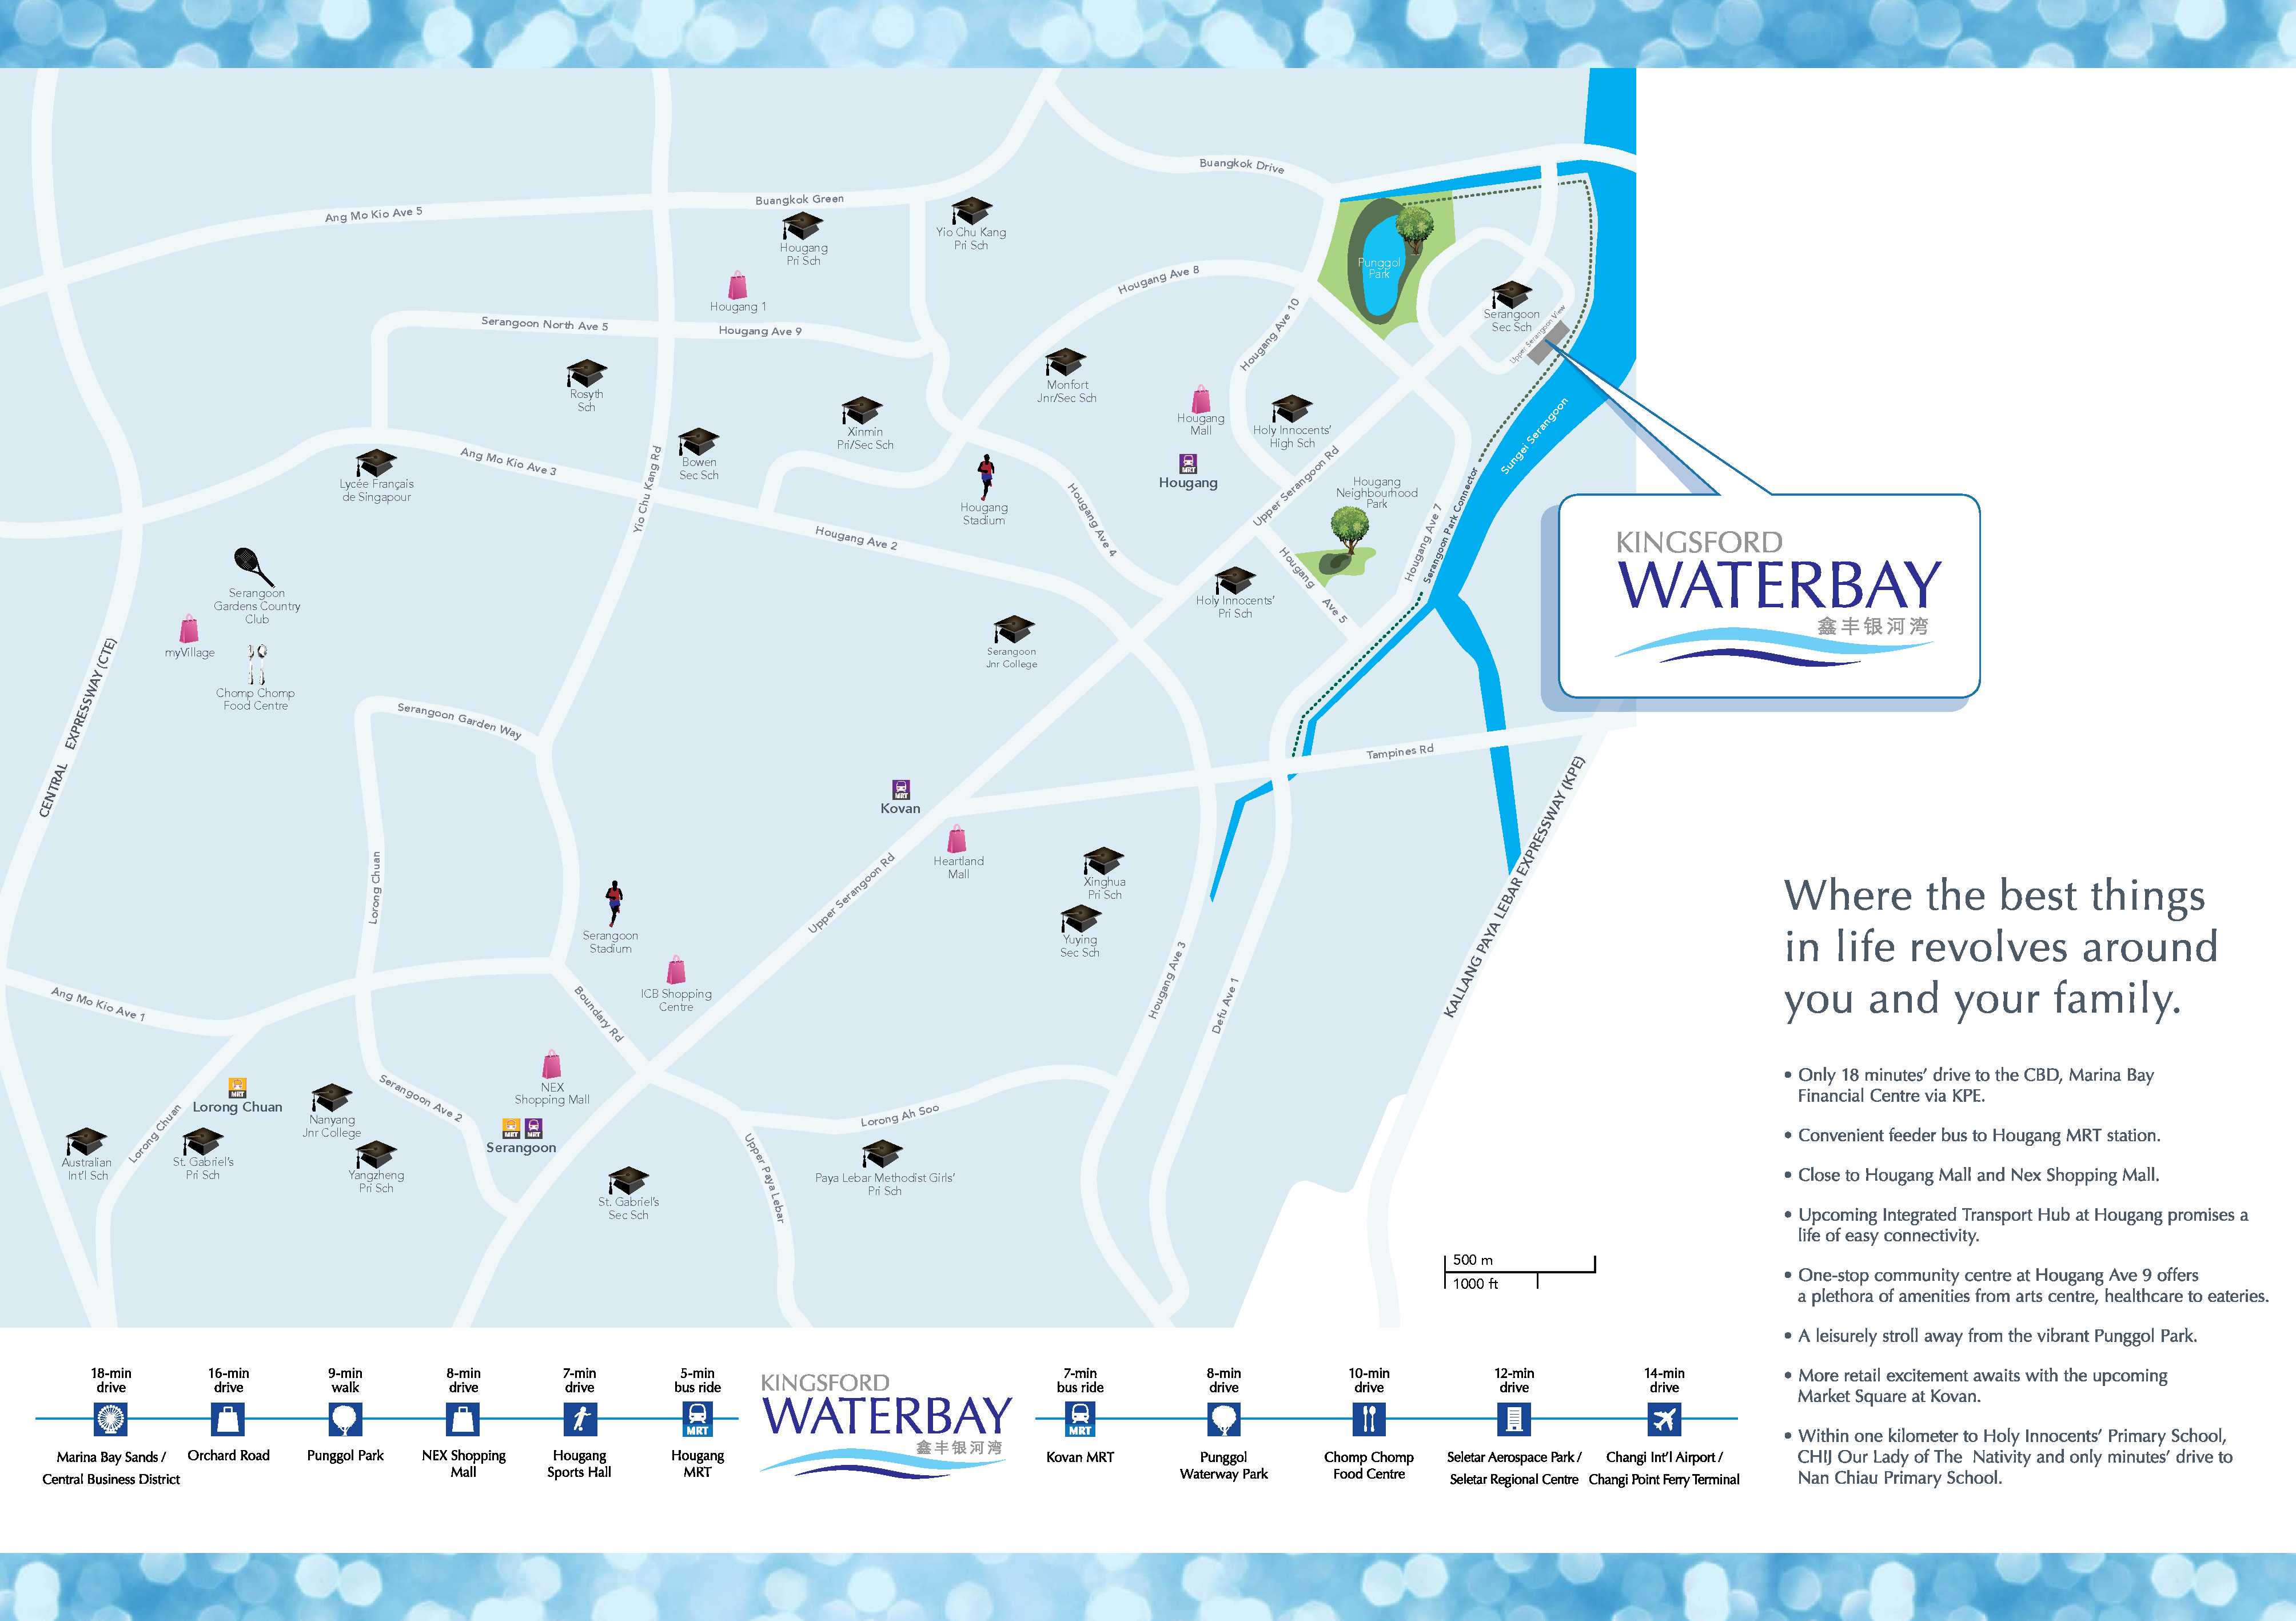 Waterbay Location & Amenities